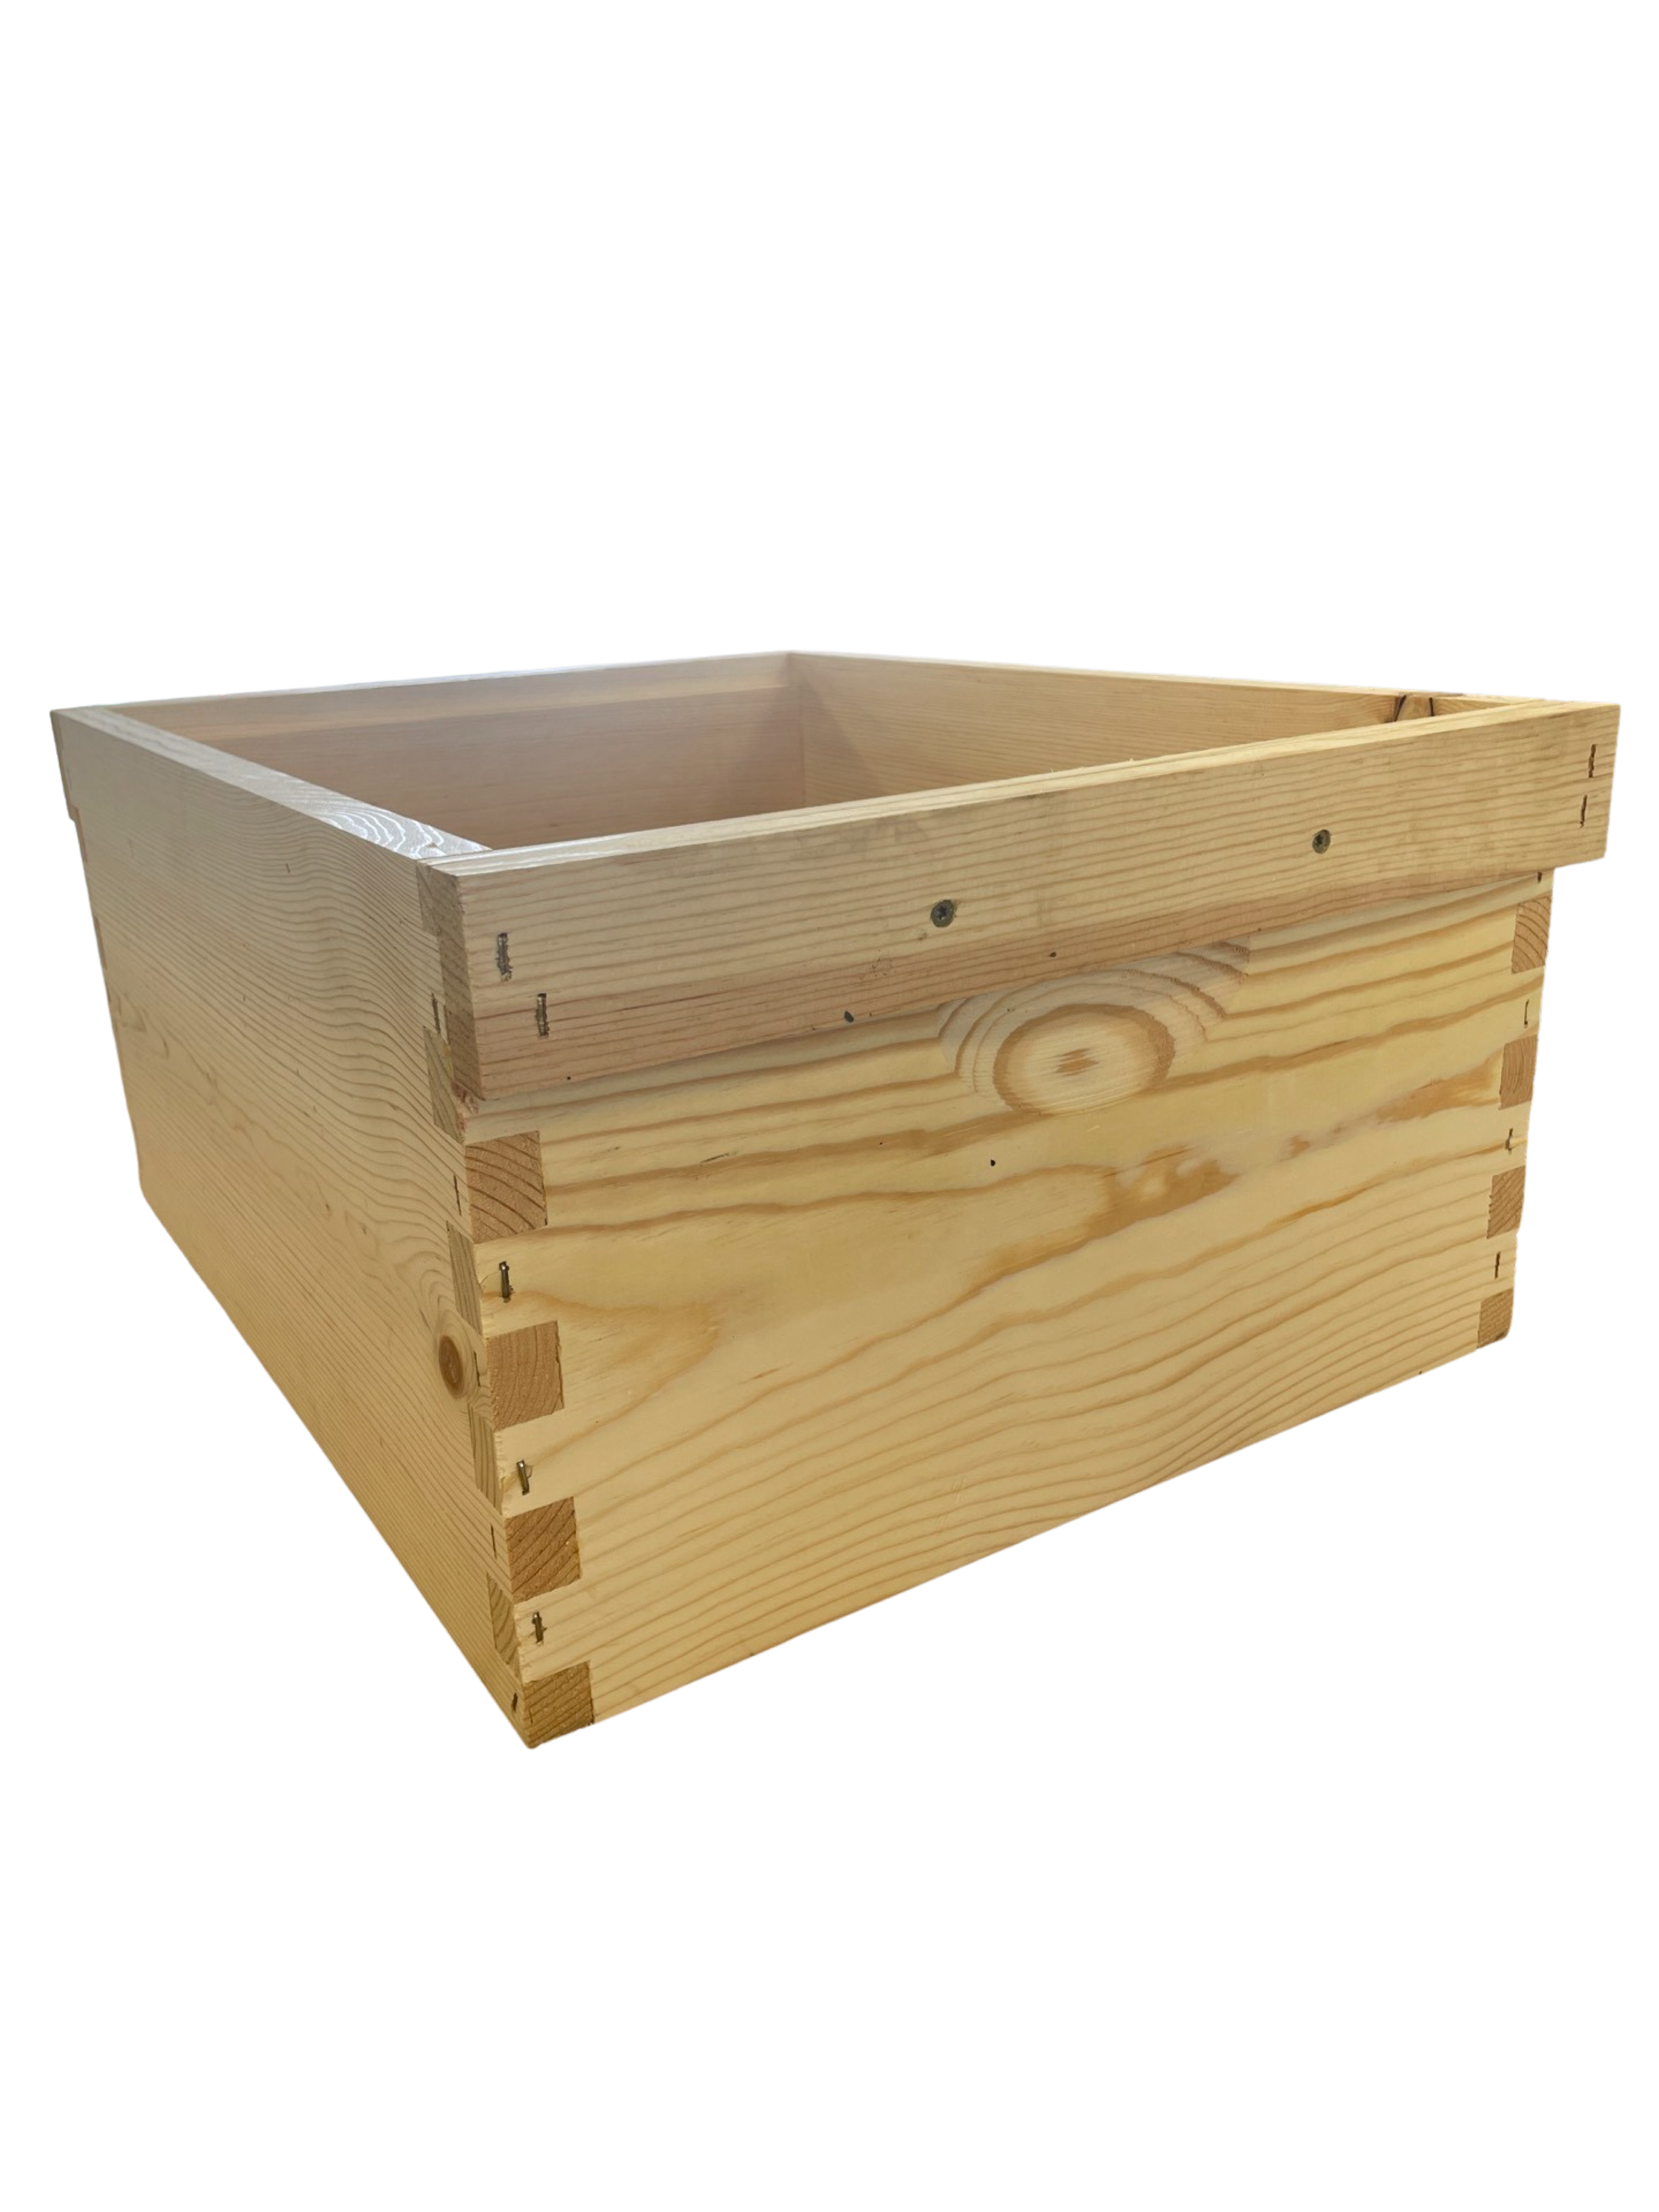 Deep (9 5/8") Hive Box | Cleated | Treated